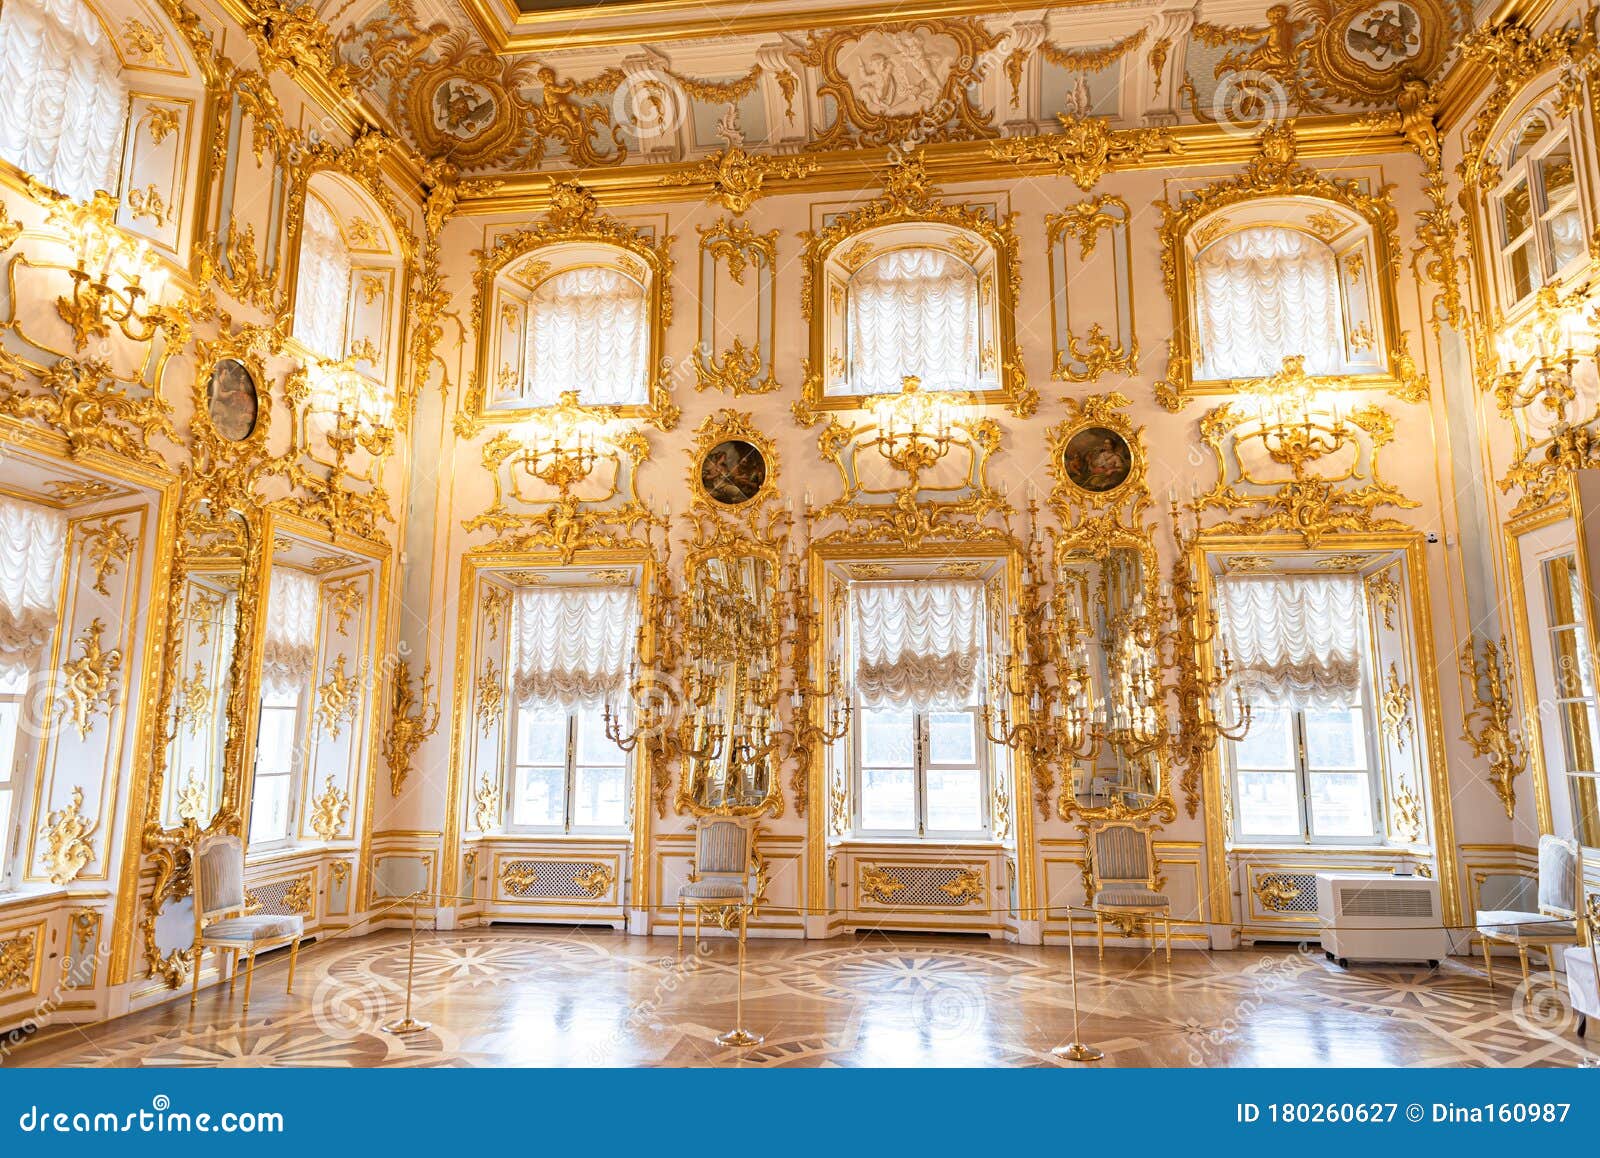 Peterhof Palace interior in Saint Petersburg, Russia